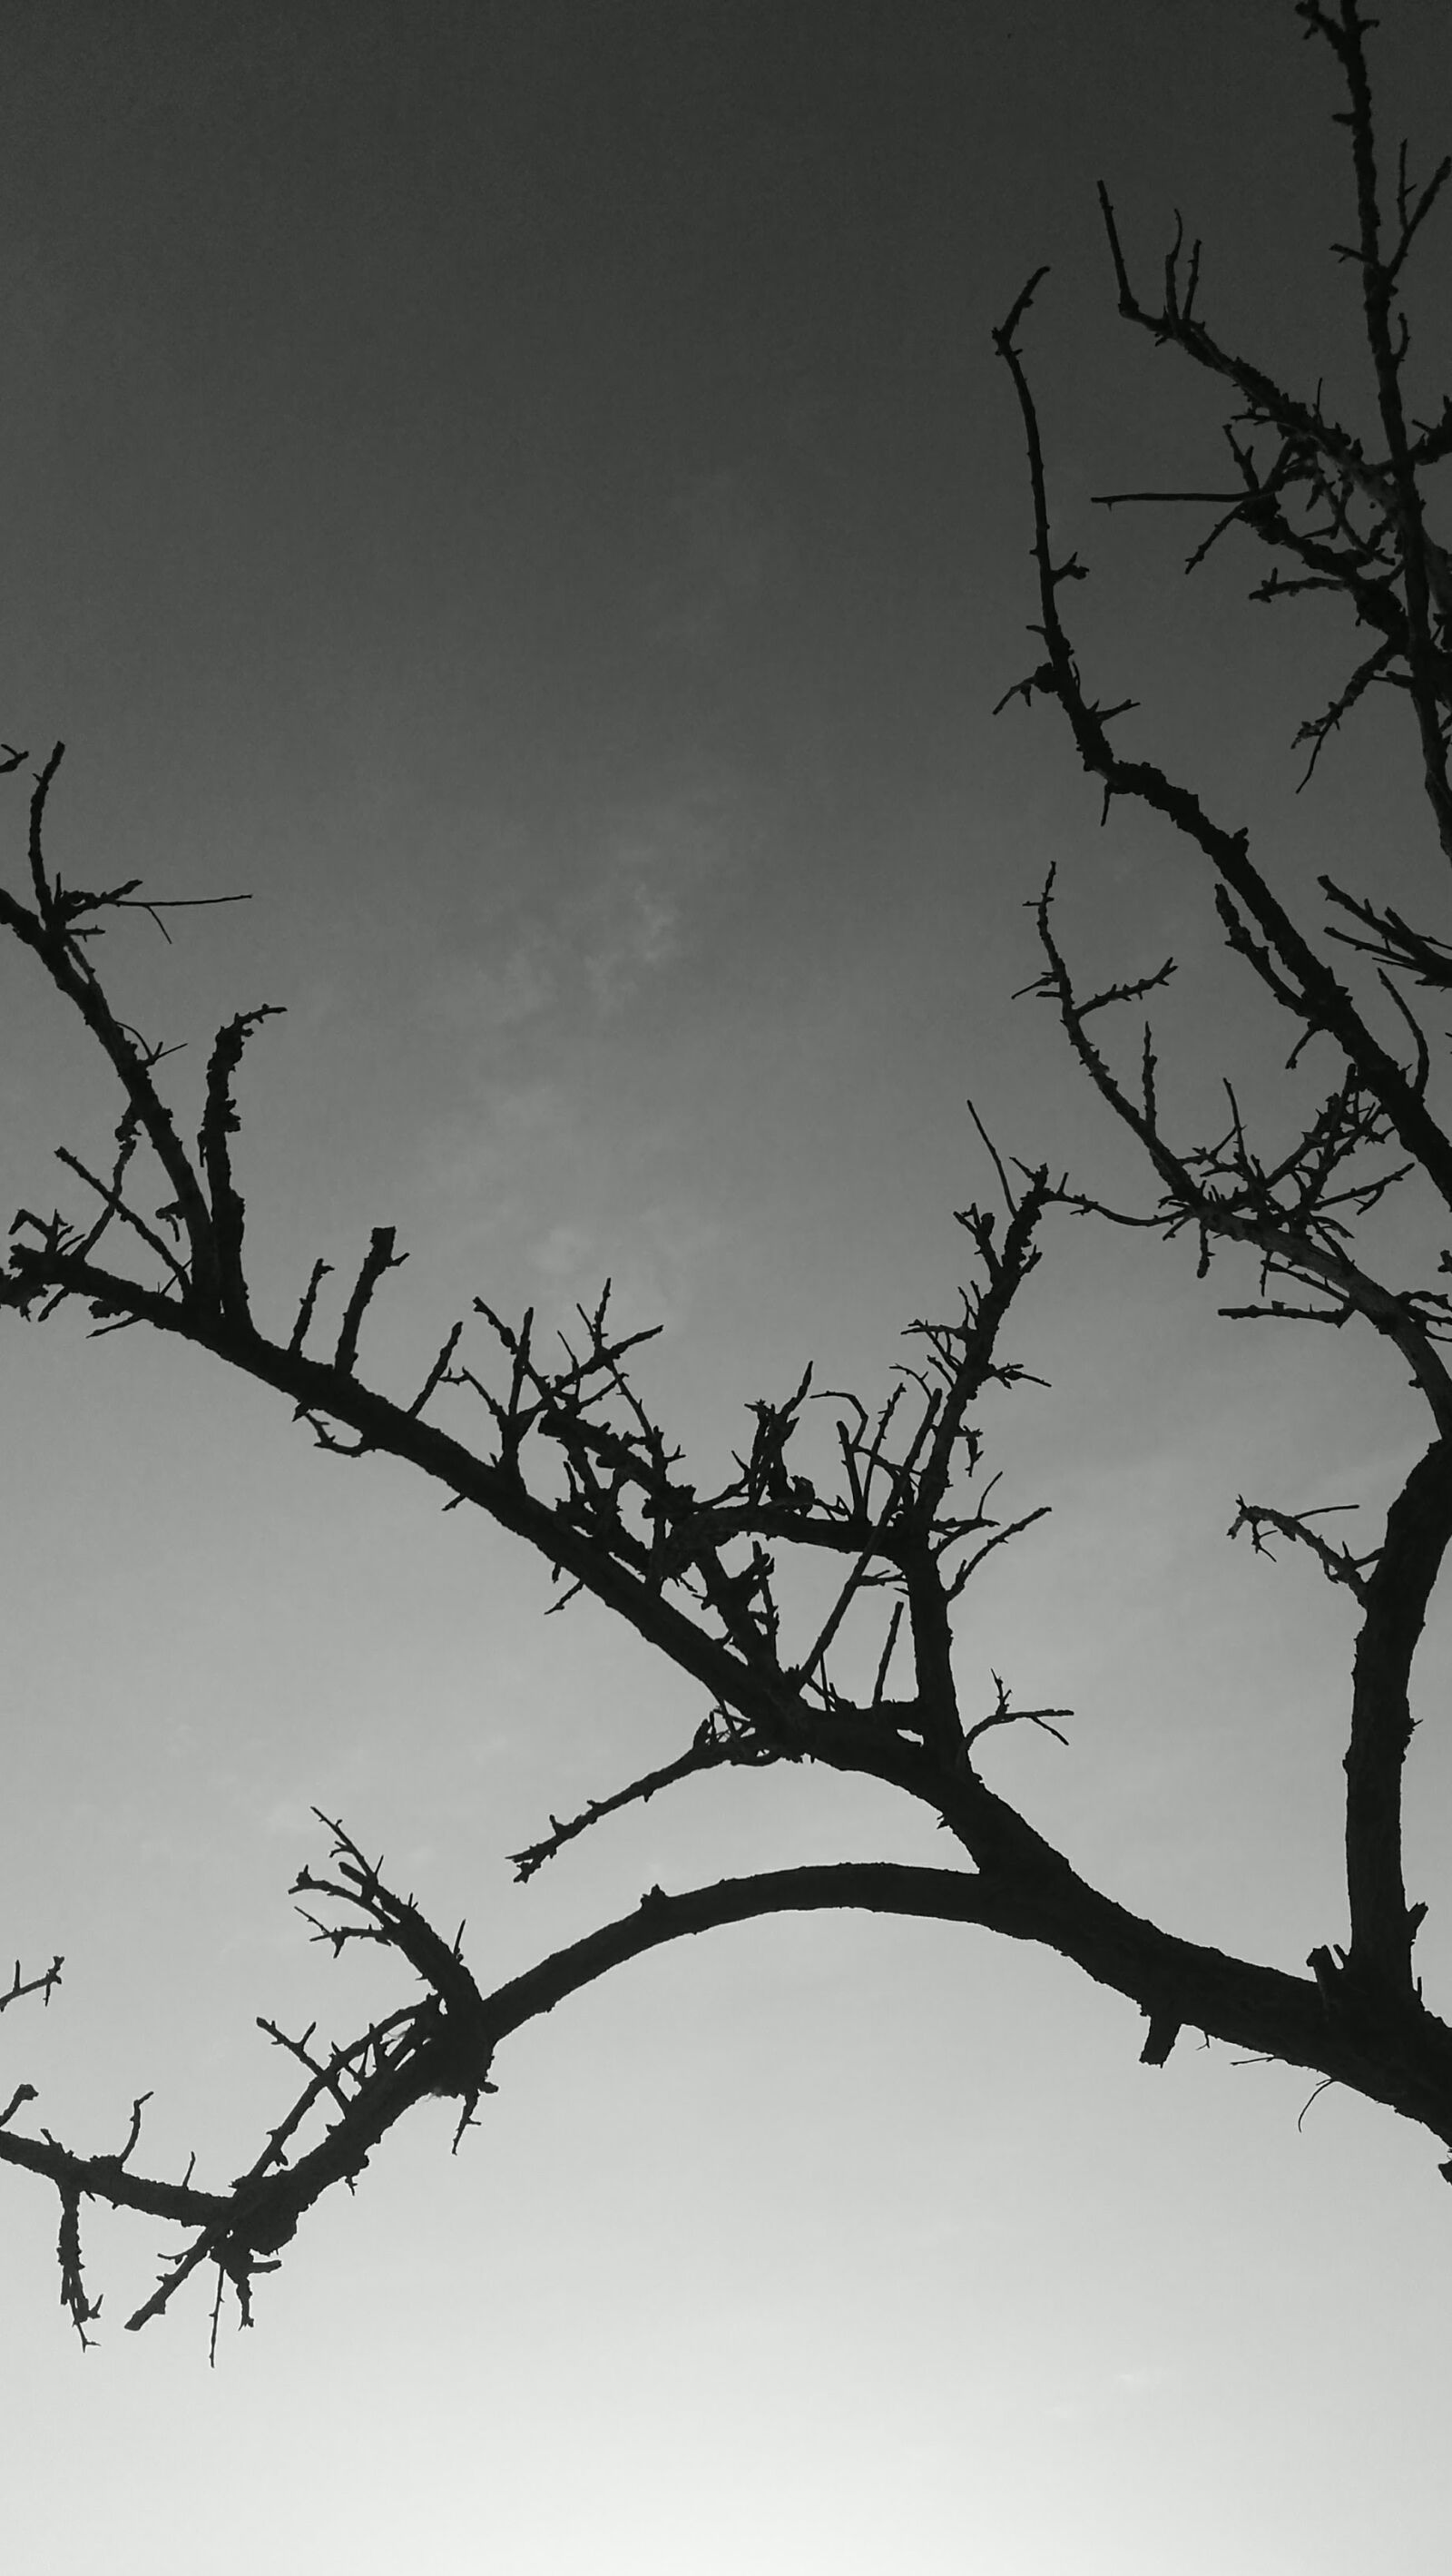 HUAWEI P8 sample photo. Blanco y negro, naturaleza photography